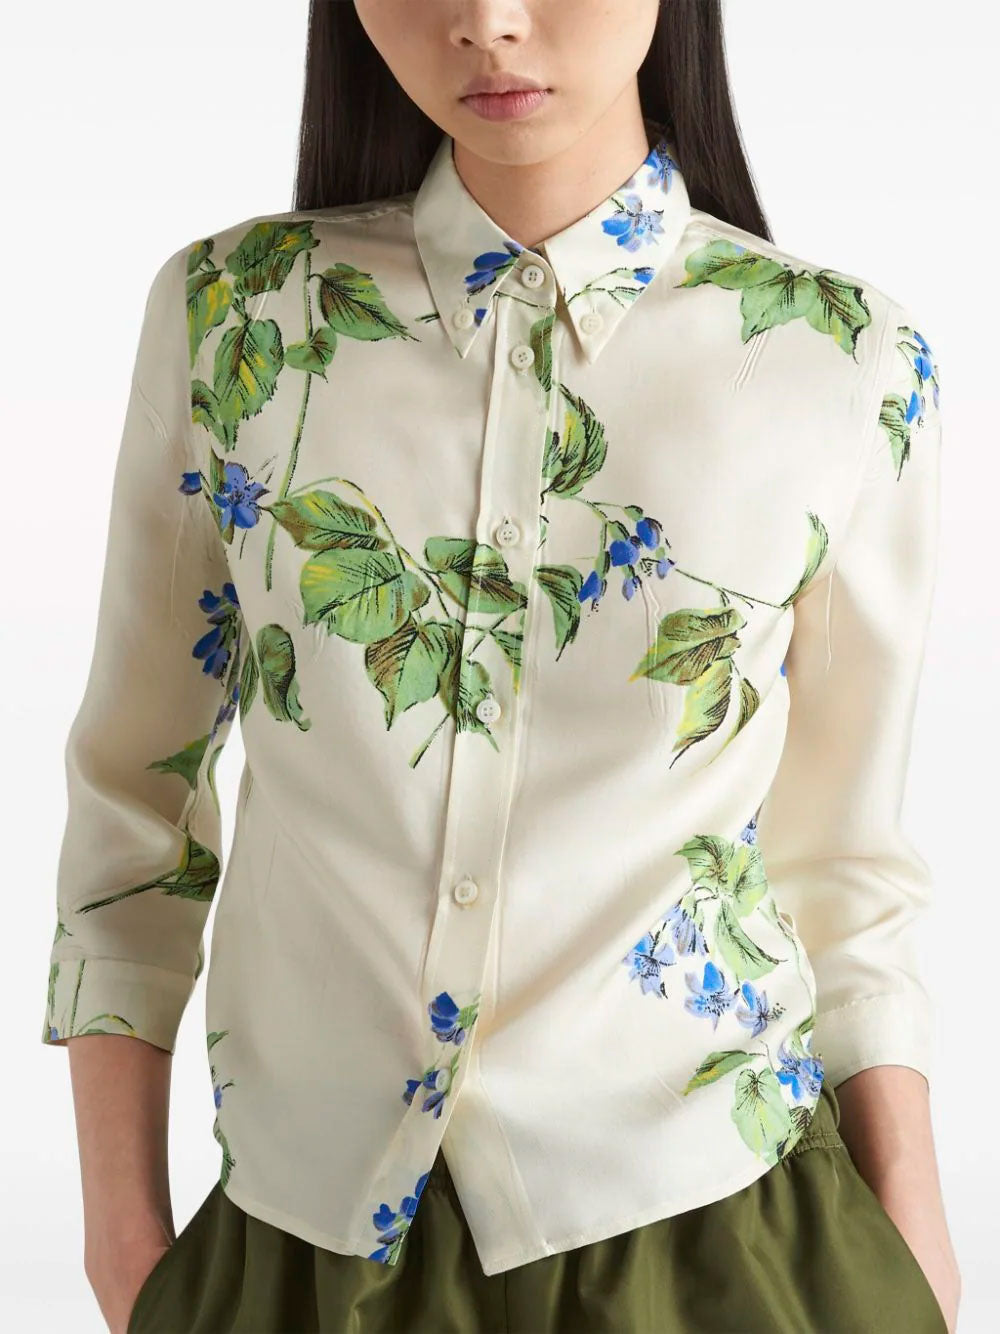 Floral-print shirt